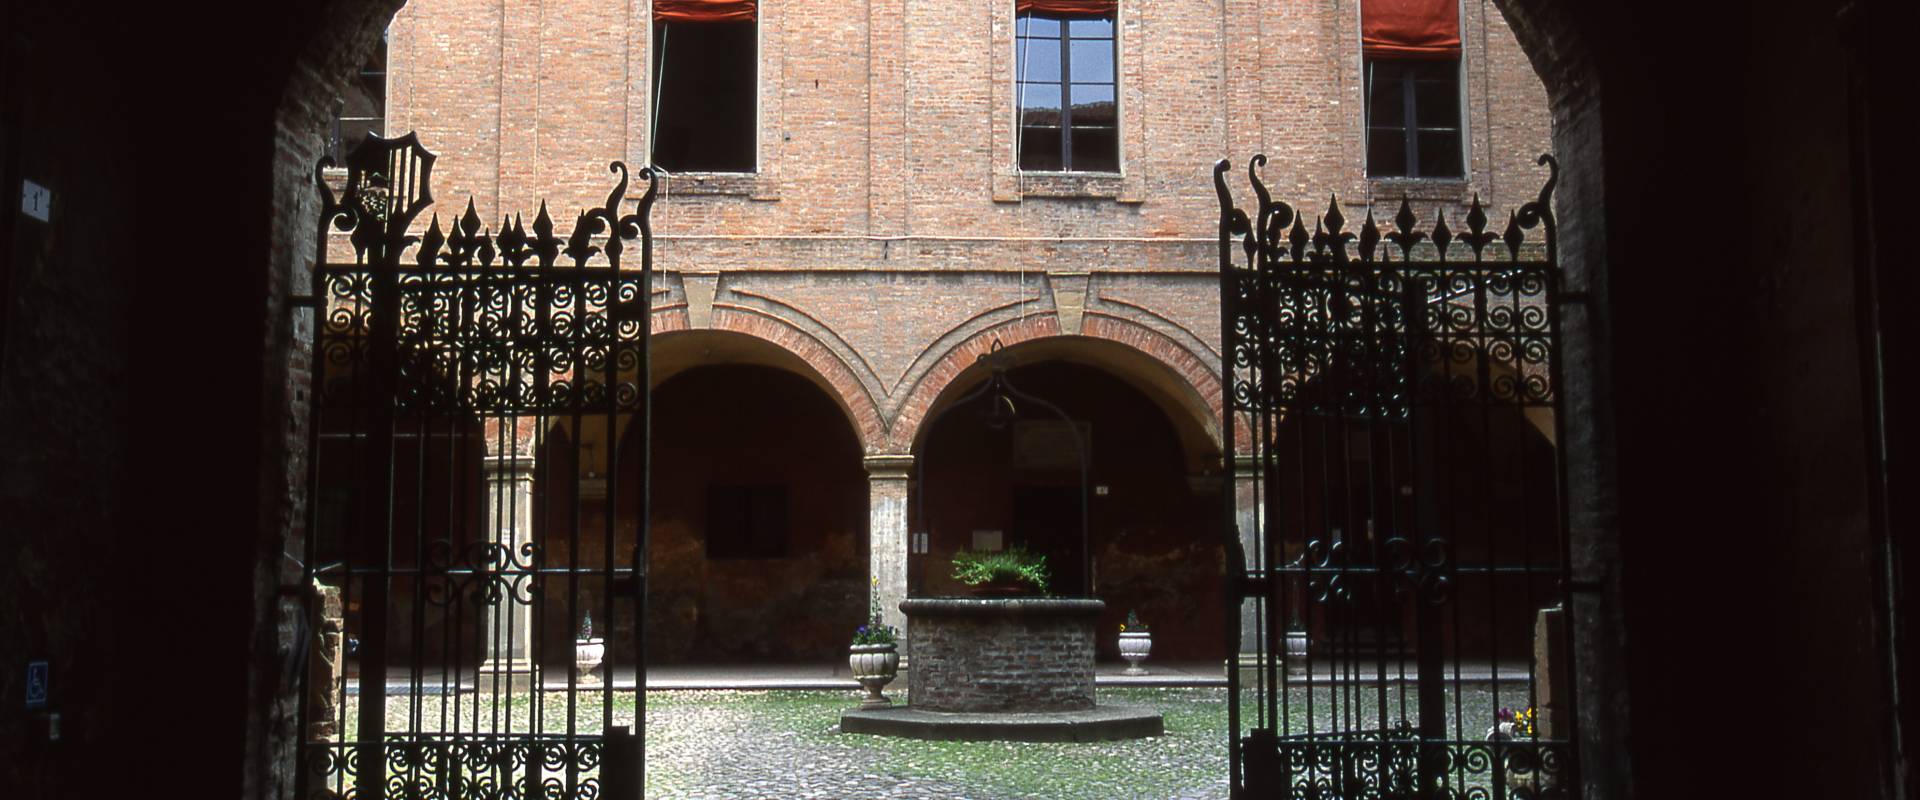 Castello Lambertini. Interno photo by Meneghetti